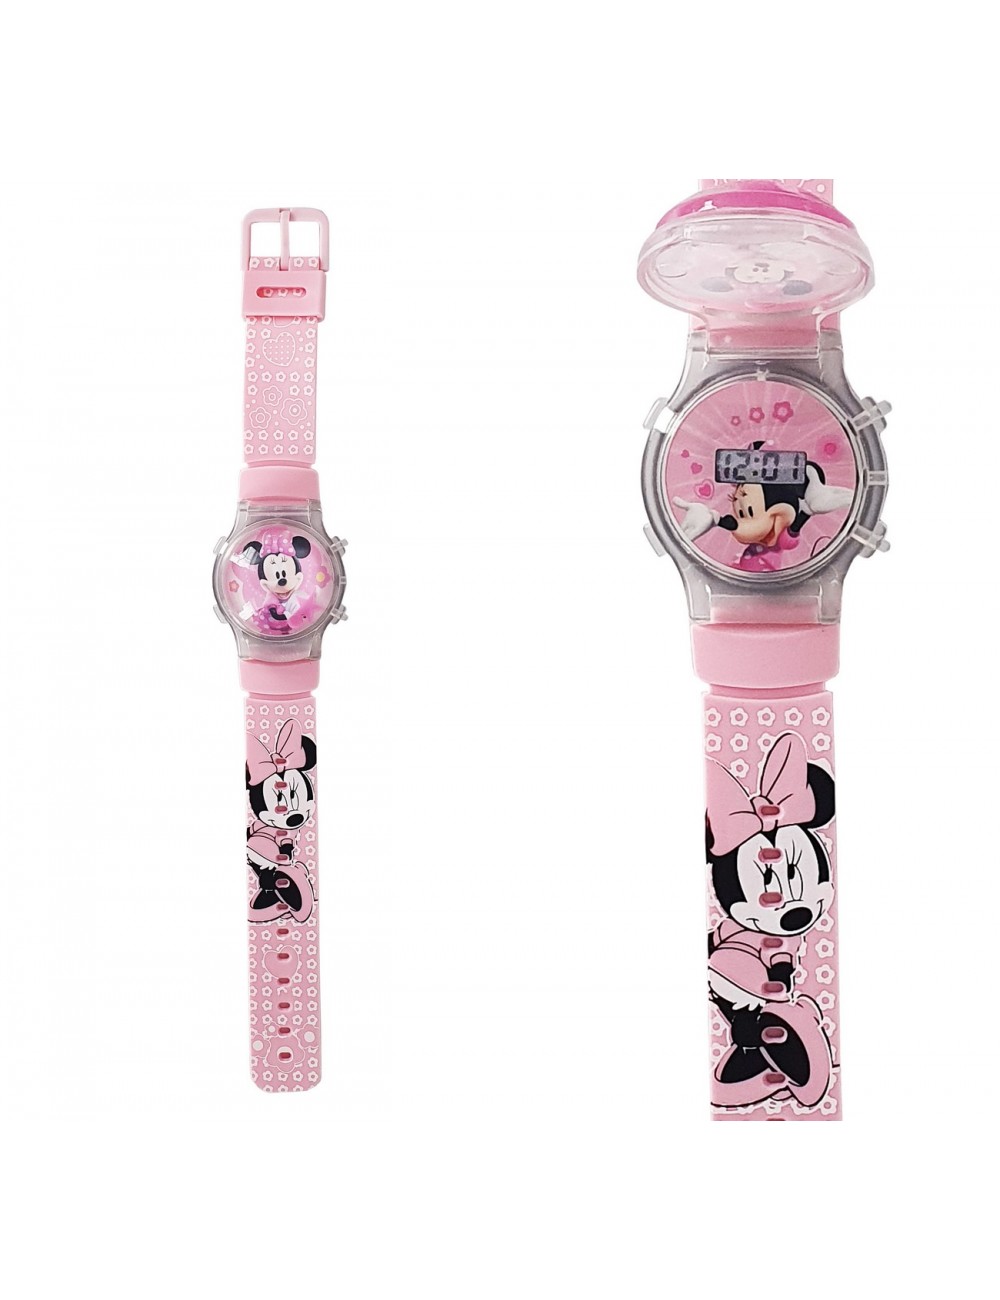 Reloj Minnie Mouse 17,900.00